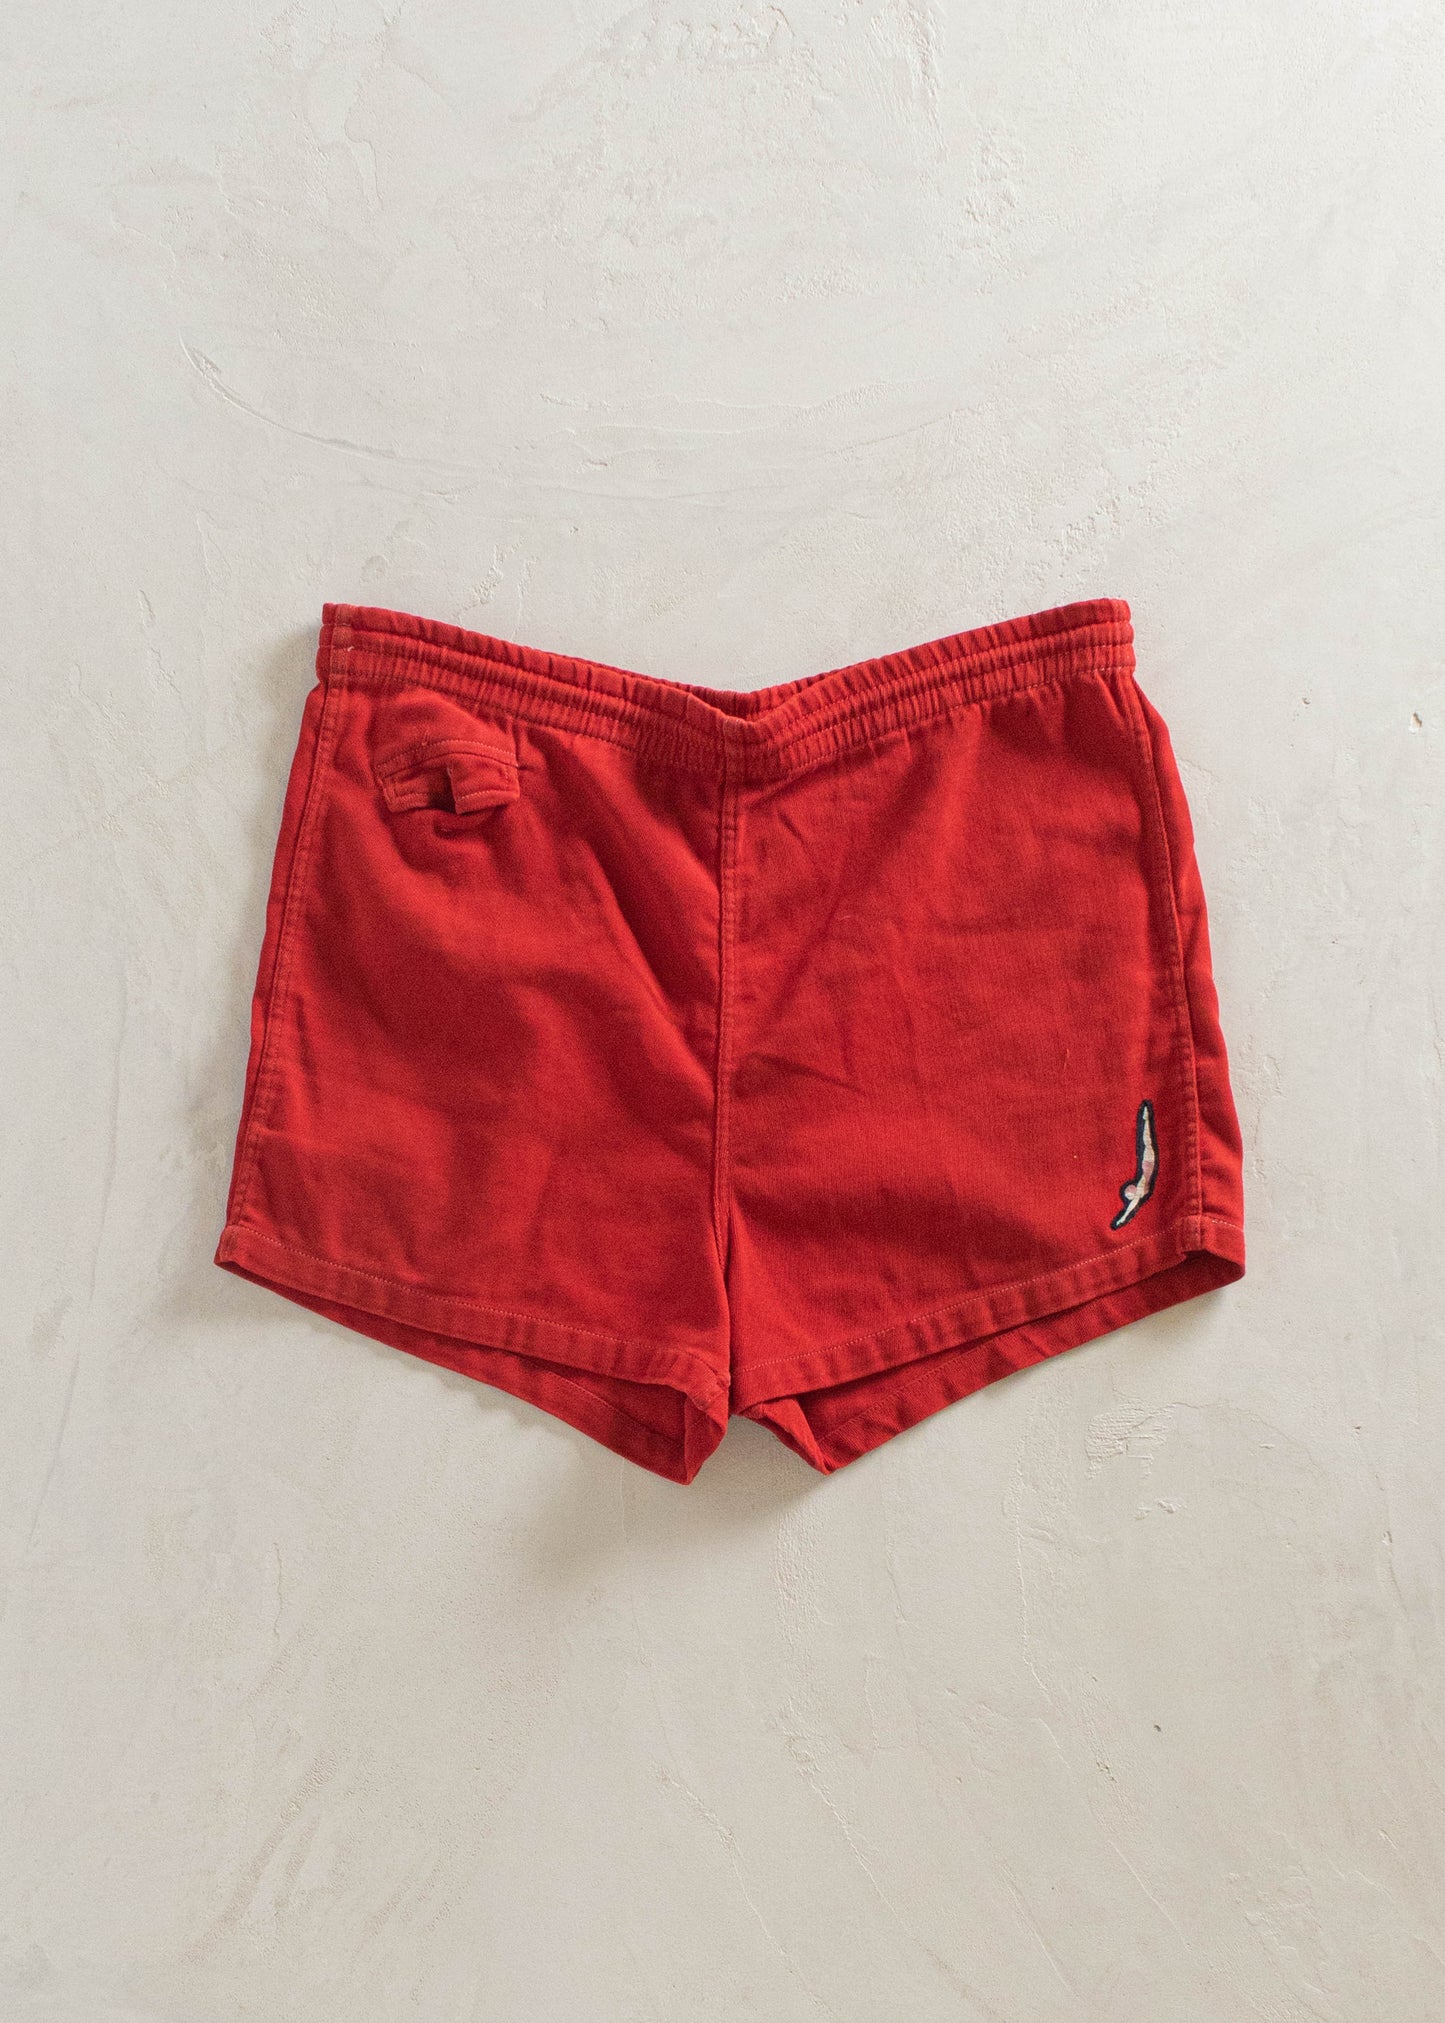 1970s Drawstring Athletic Shorts Size M/L